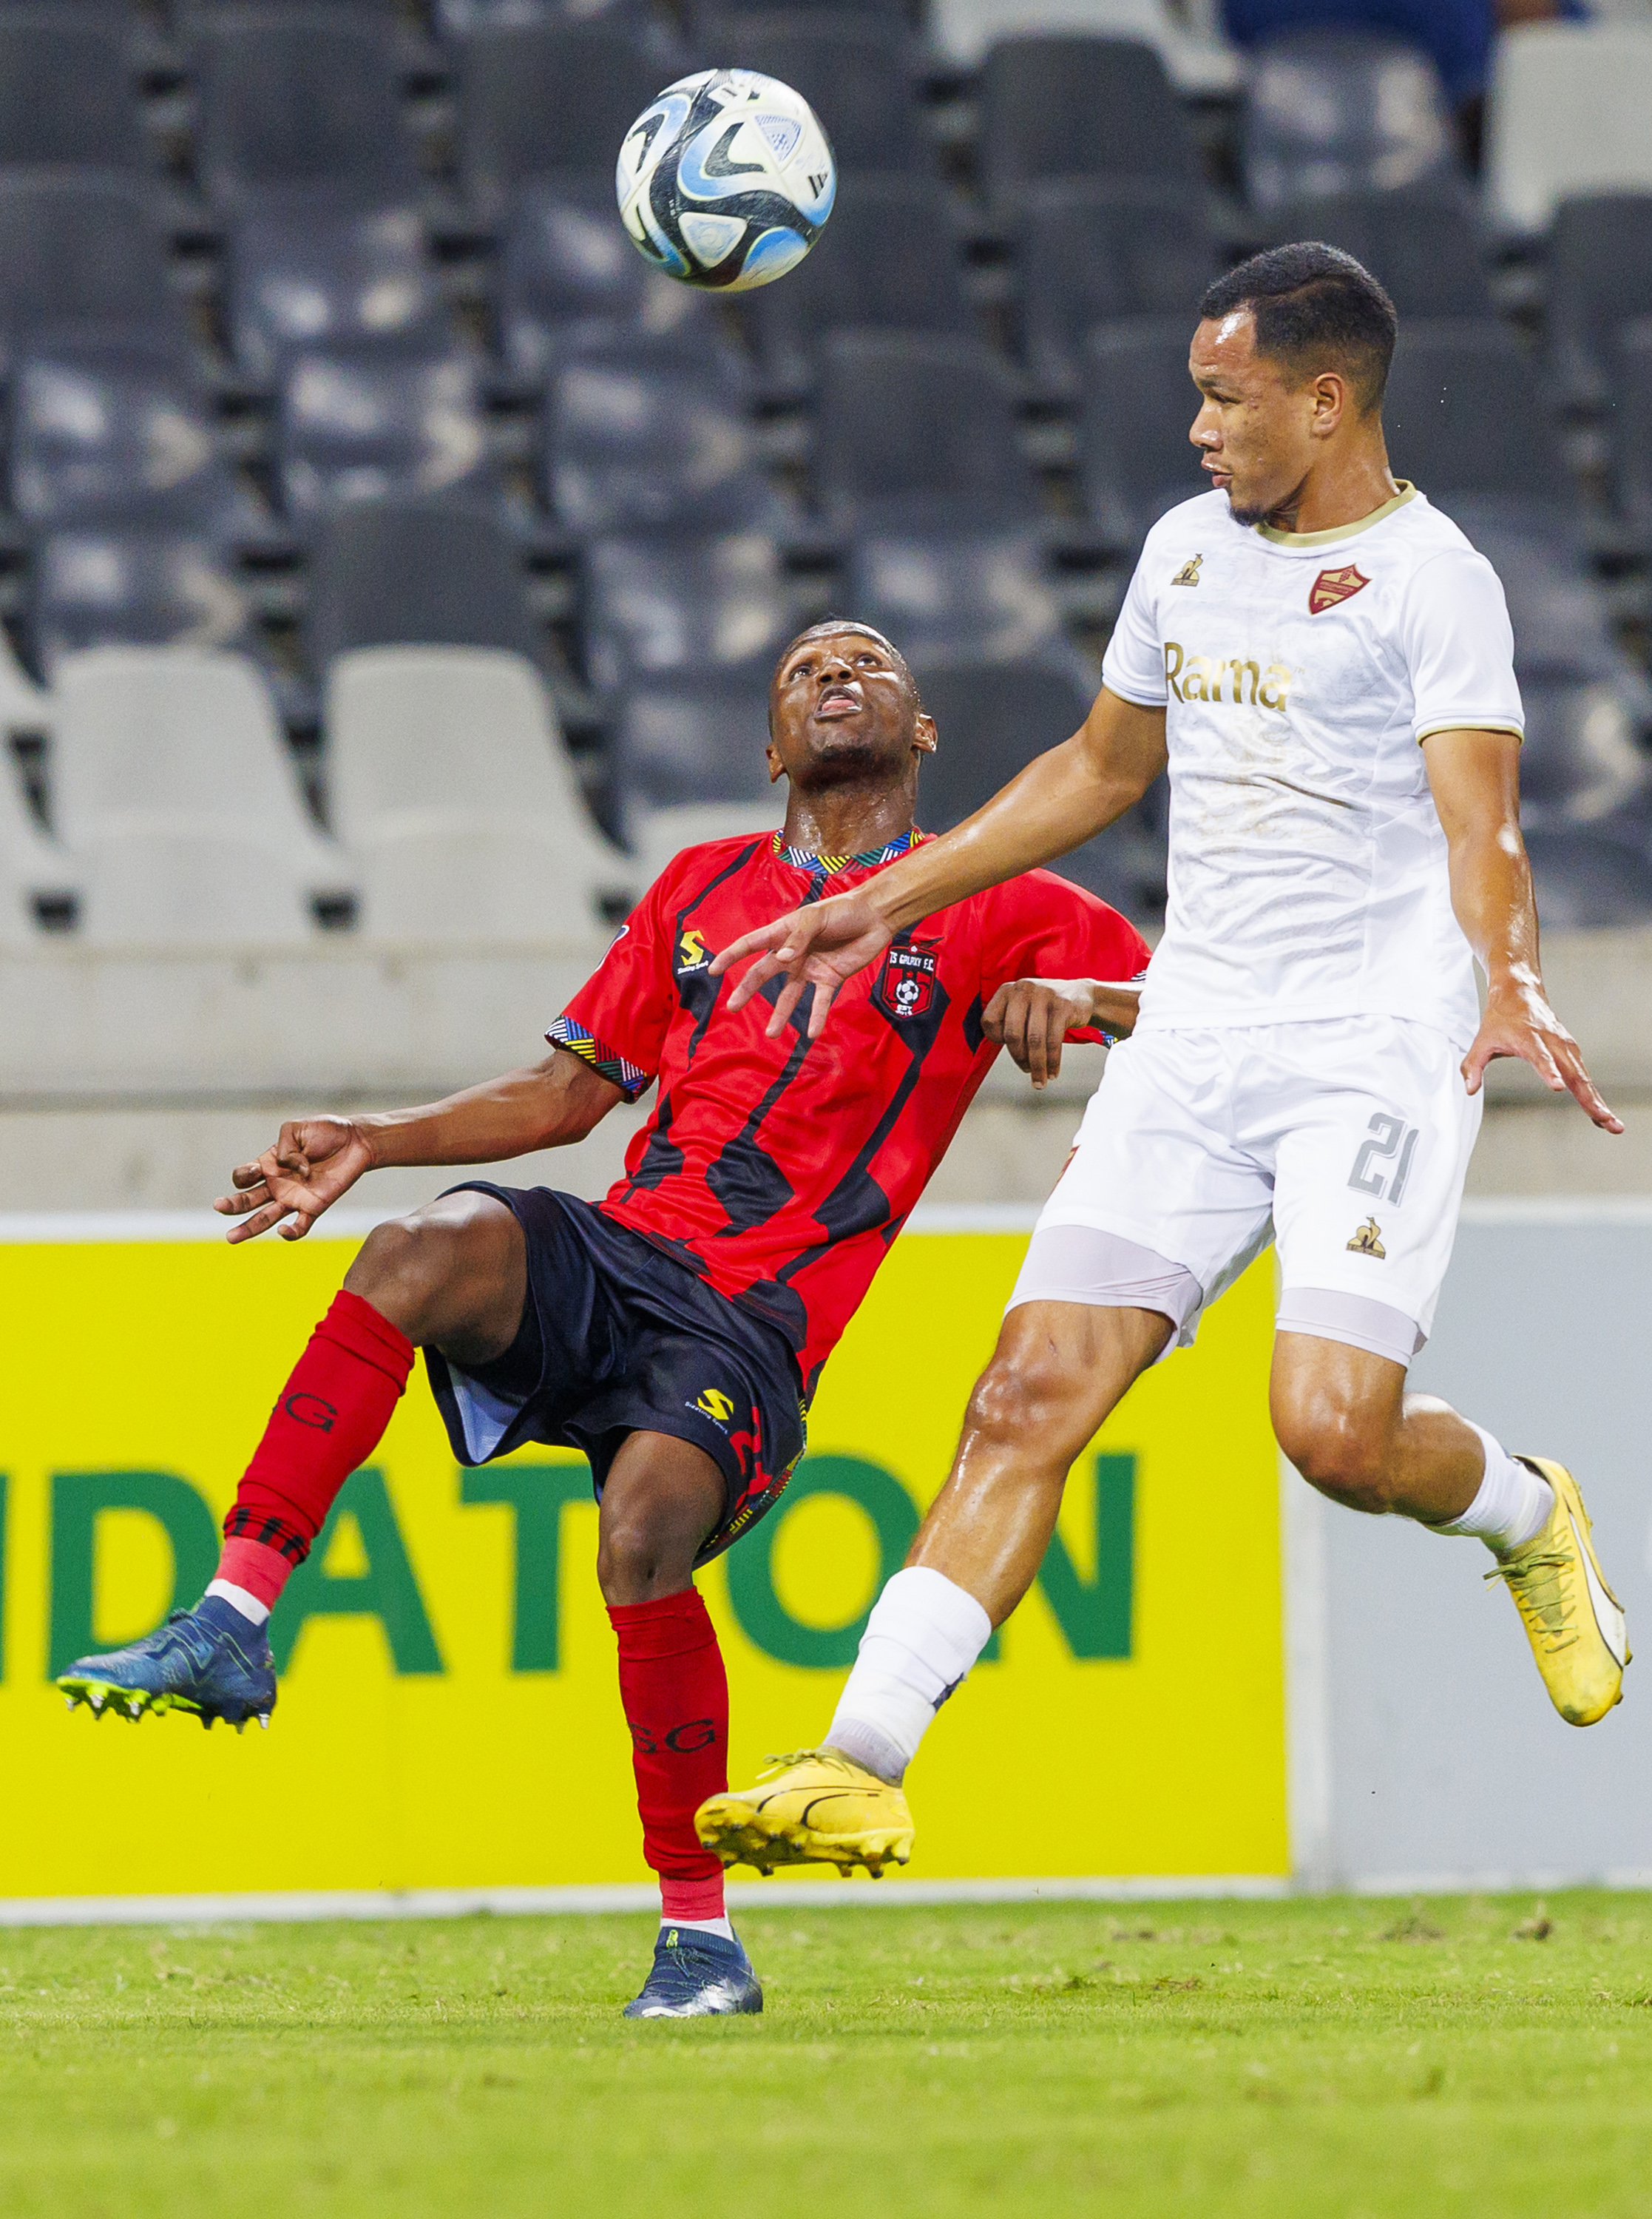 Kamogelo Sebelebele of TS Galaxy FC and Fawaaz Basadien of Stellenbosch FC